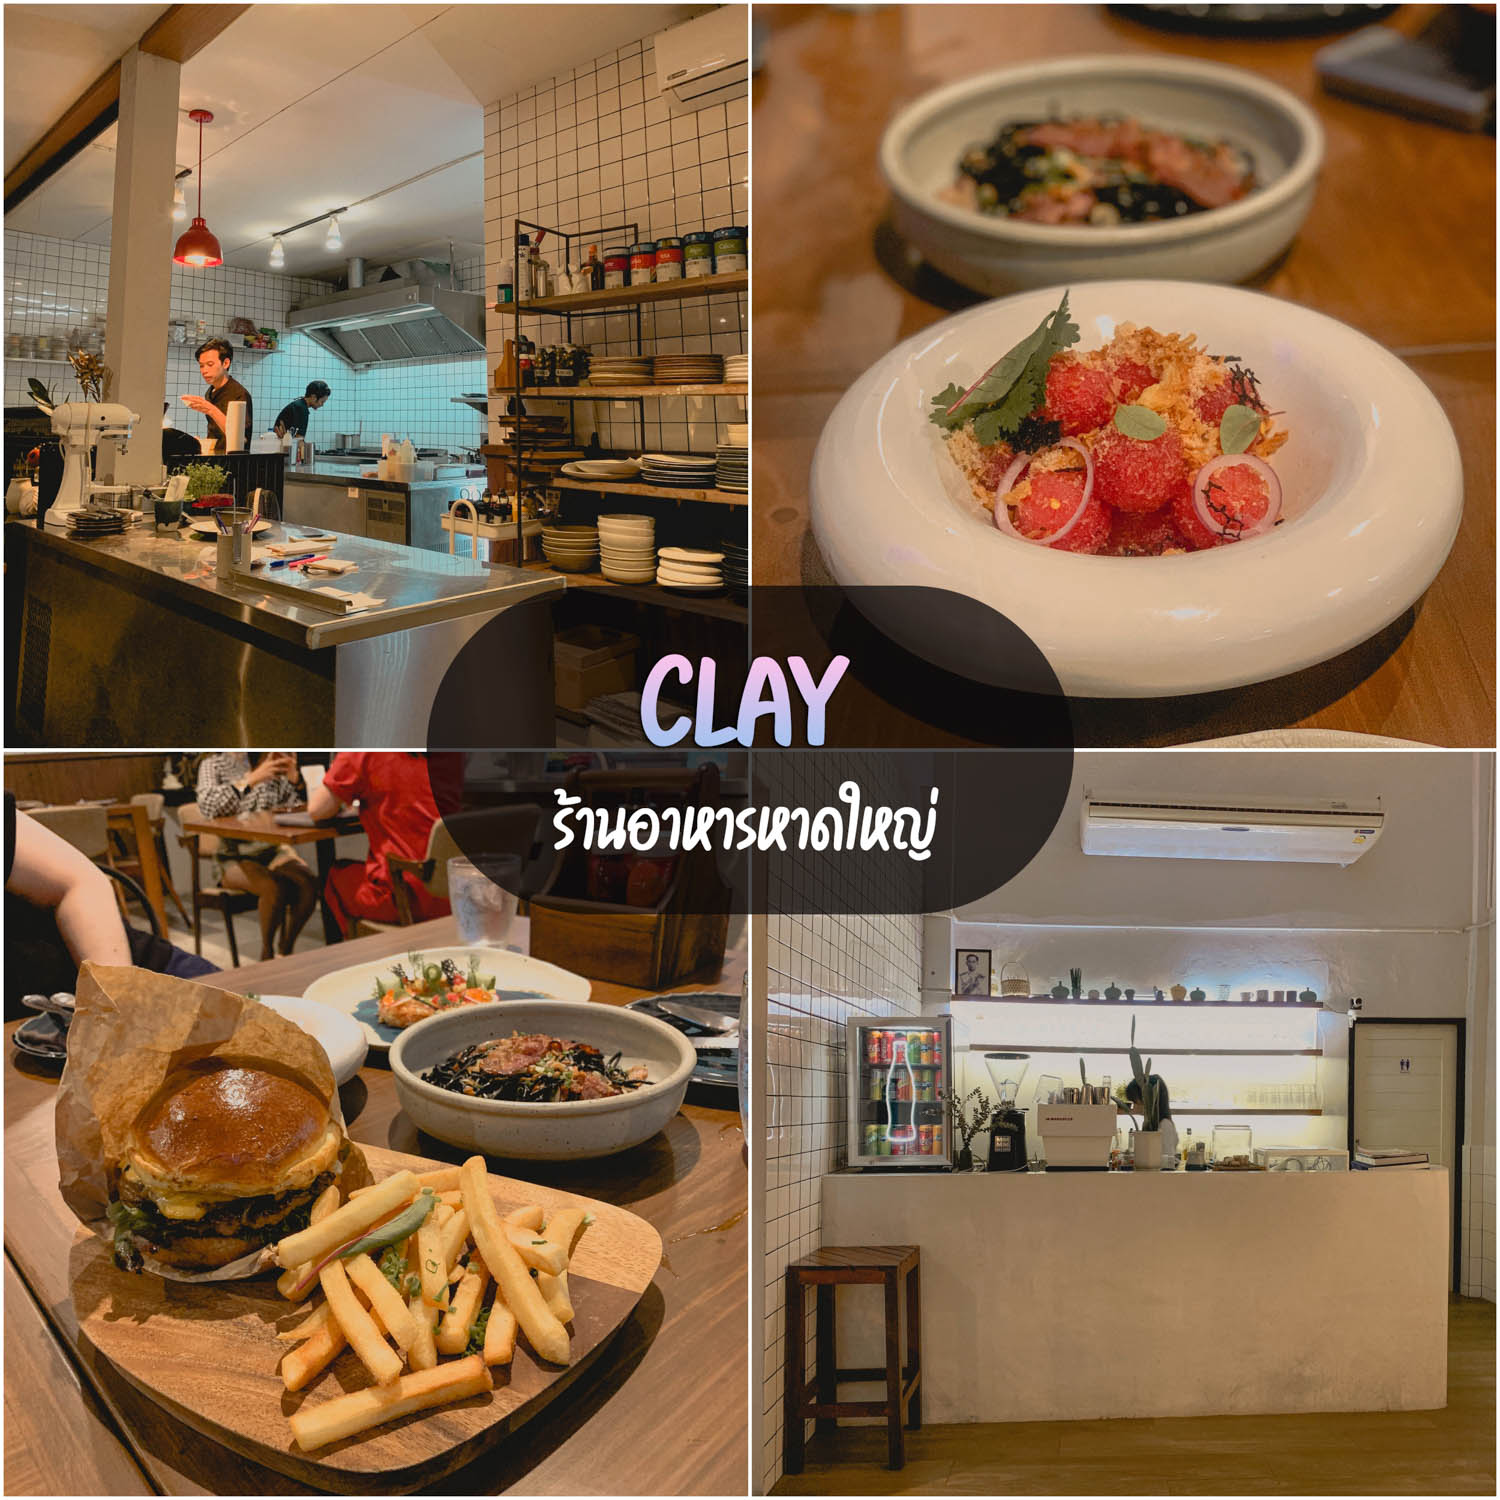 Clay ร้านอาหารหาดใหญ่ คาเฟ่หาดใหญ่ สไตล์อิตาลีรสชาติอร่อยสดใหม่ใช้วัตถุดิบที่มีคุณภาพเหมาะกับมื้ออาหารค่ำในวันพิเศษ